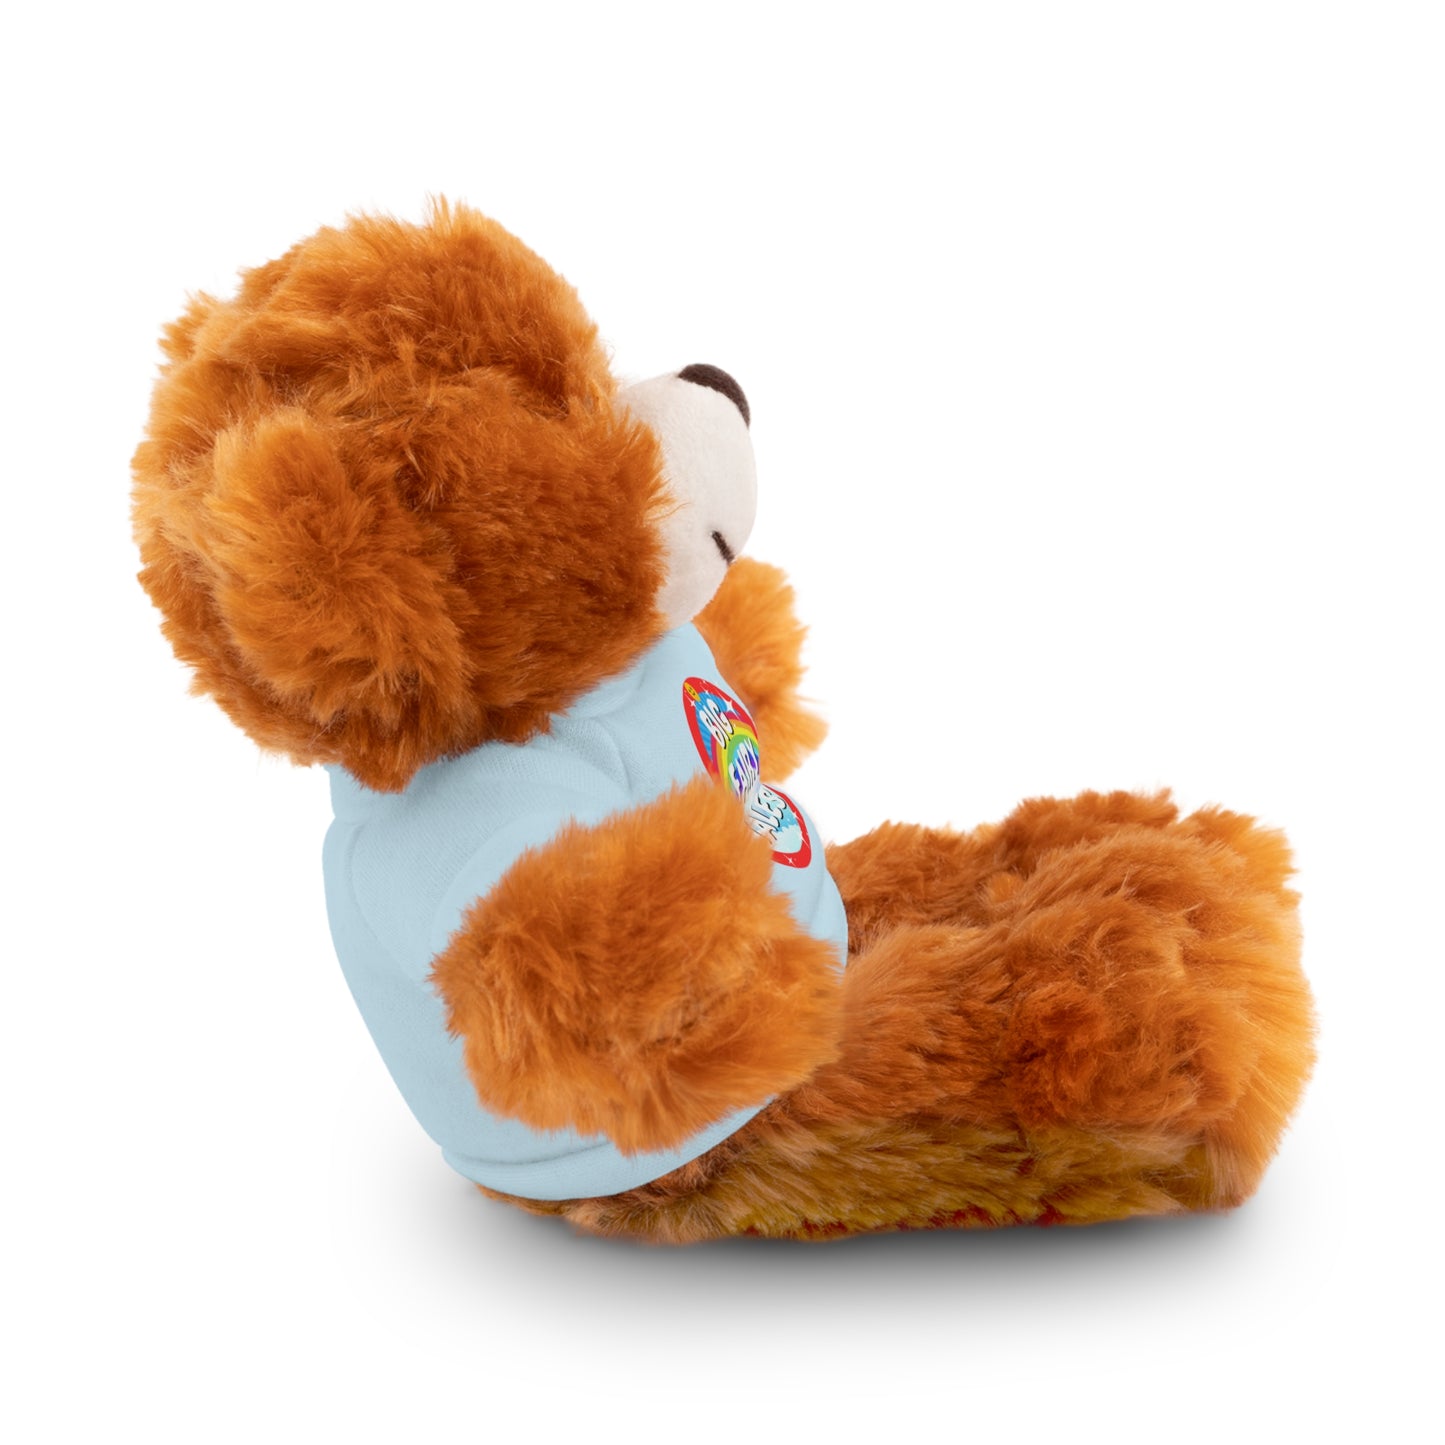 Big Fairy Tales By Schatar Adorable Stuffed Animal With Rainbow Tee